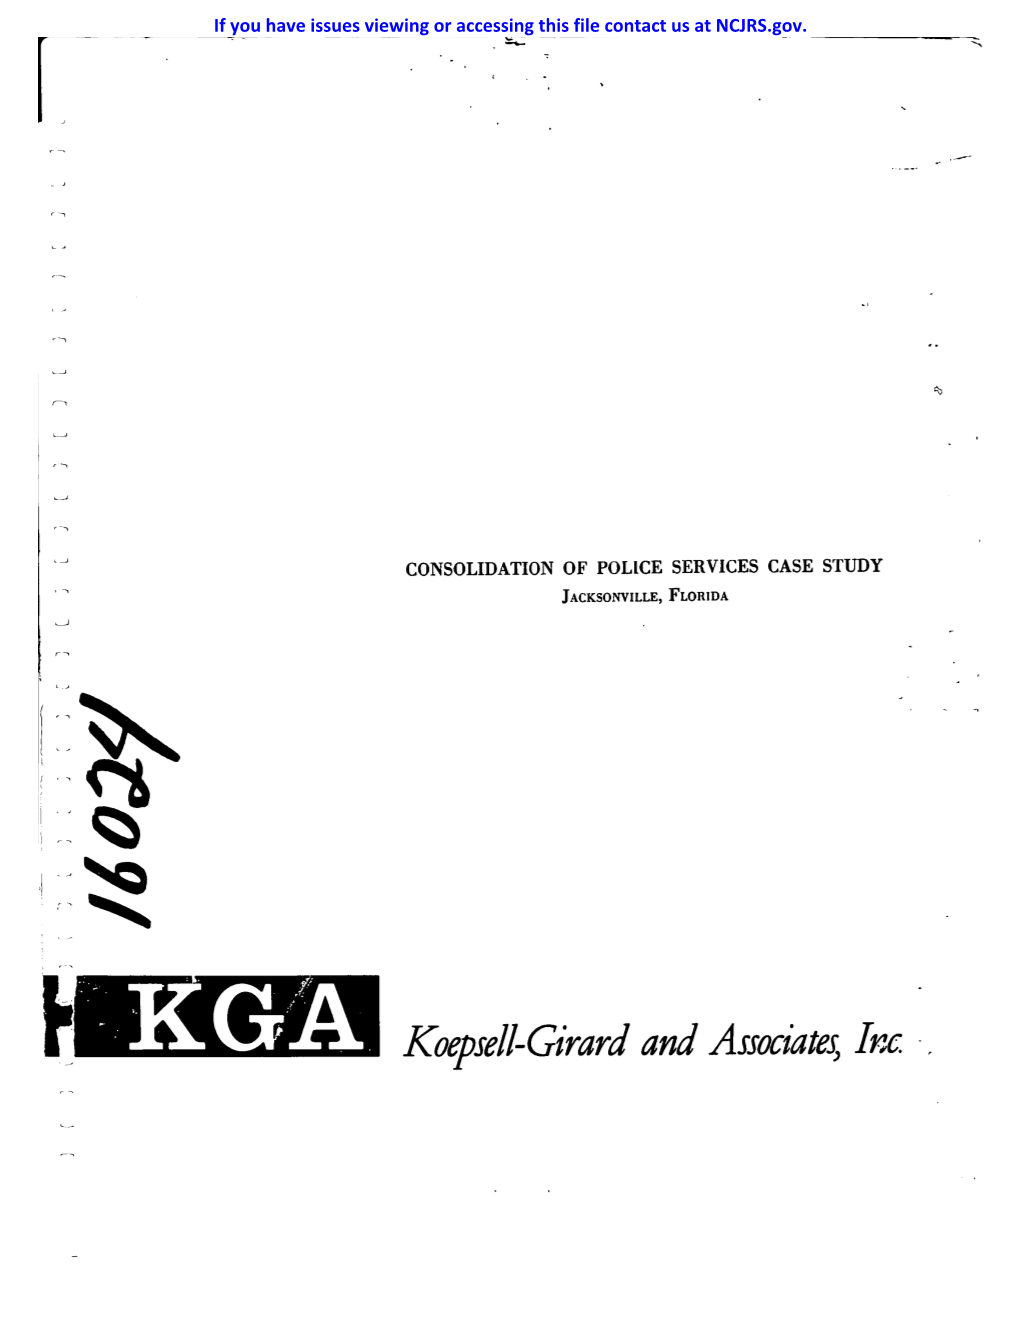 Koe2sell-Girard and Associates, Ir.,C